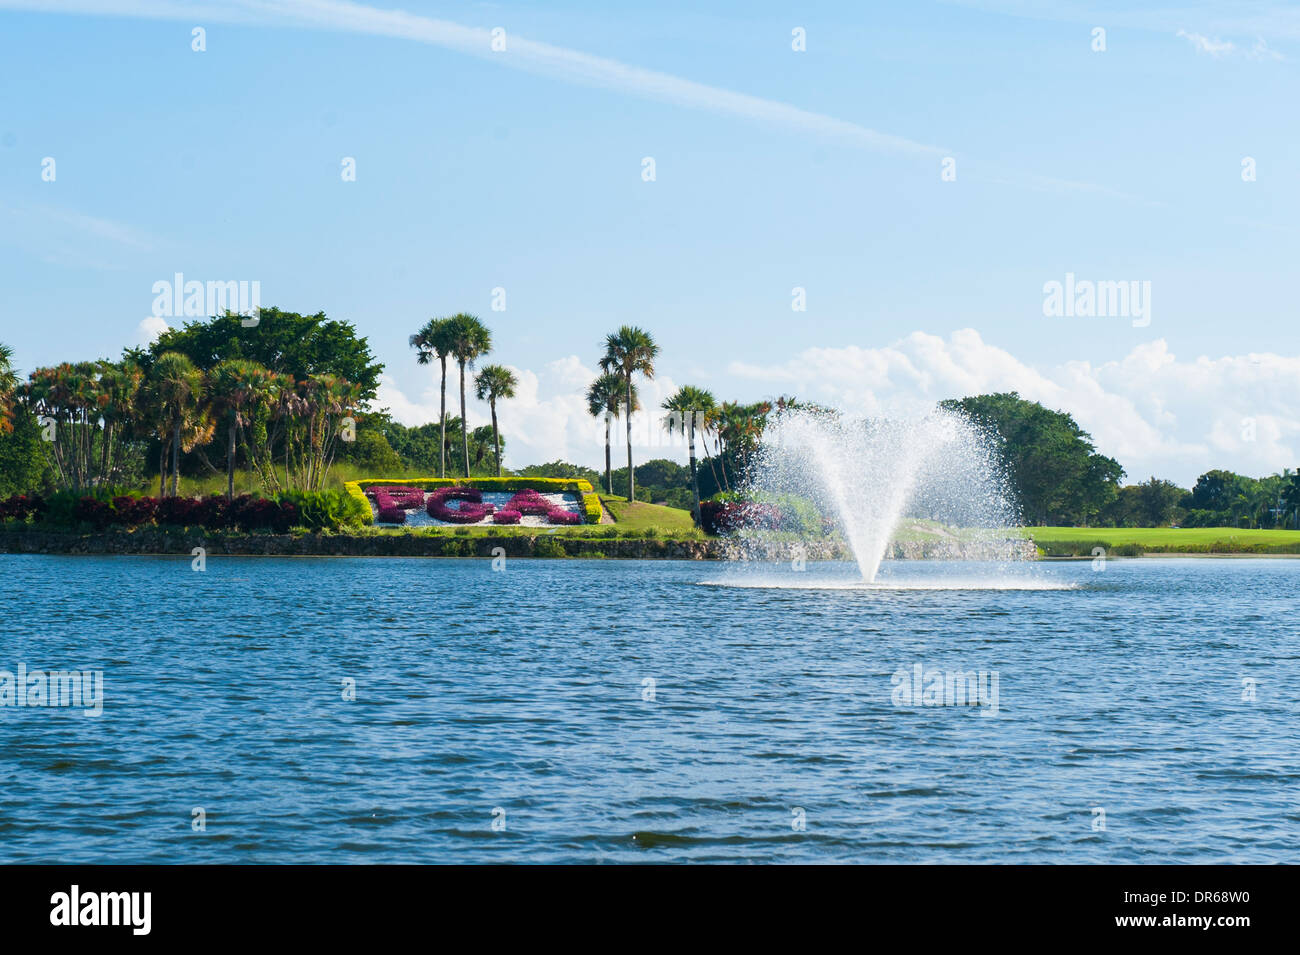 USA Florida PGA National Golf Course Palm Beach Gardens disposent d'eau du lac fontaine ciel bleu arbres fleurs gazon Banque D'Images